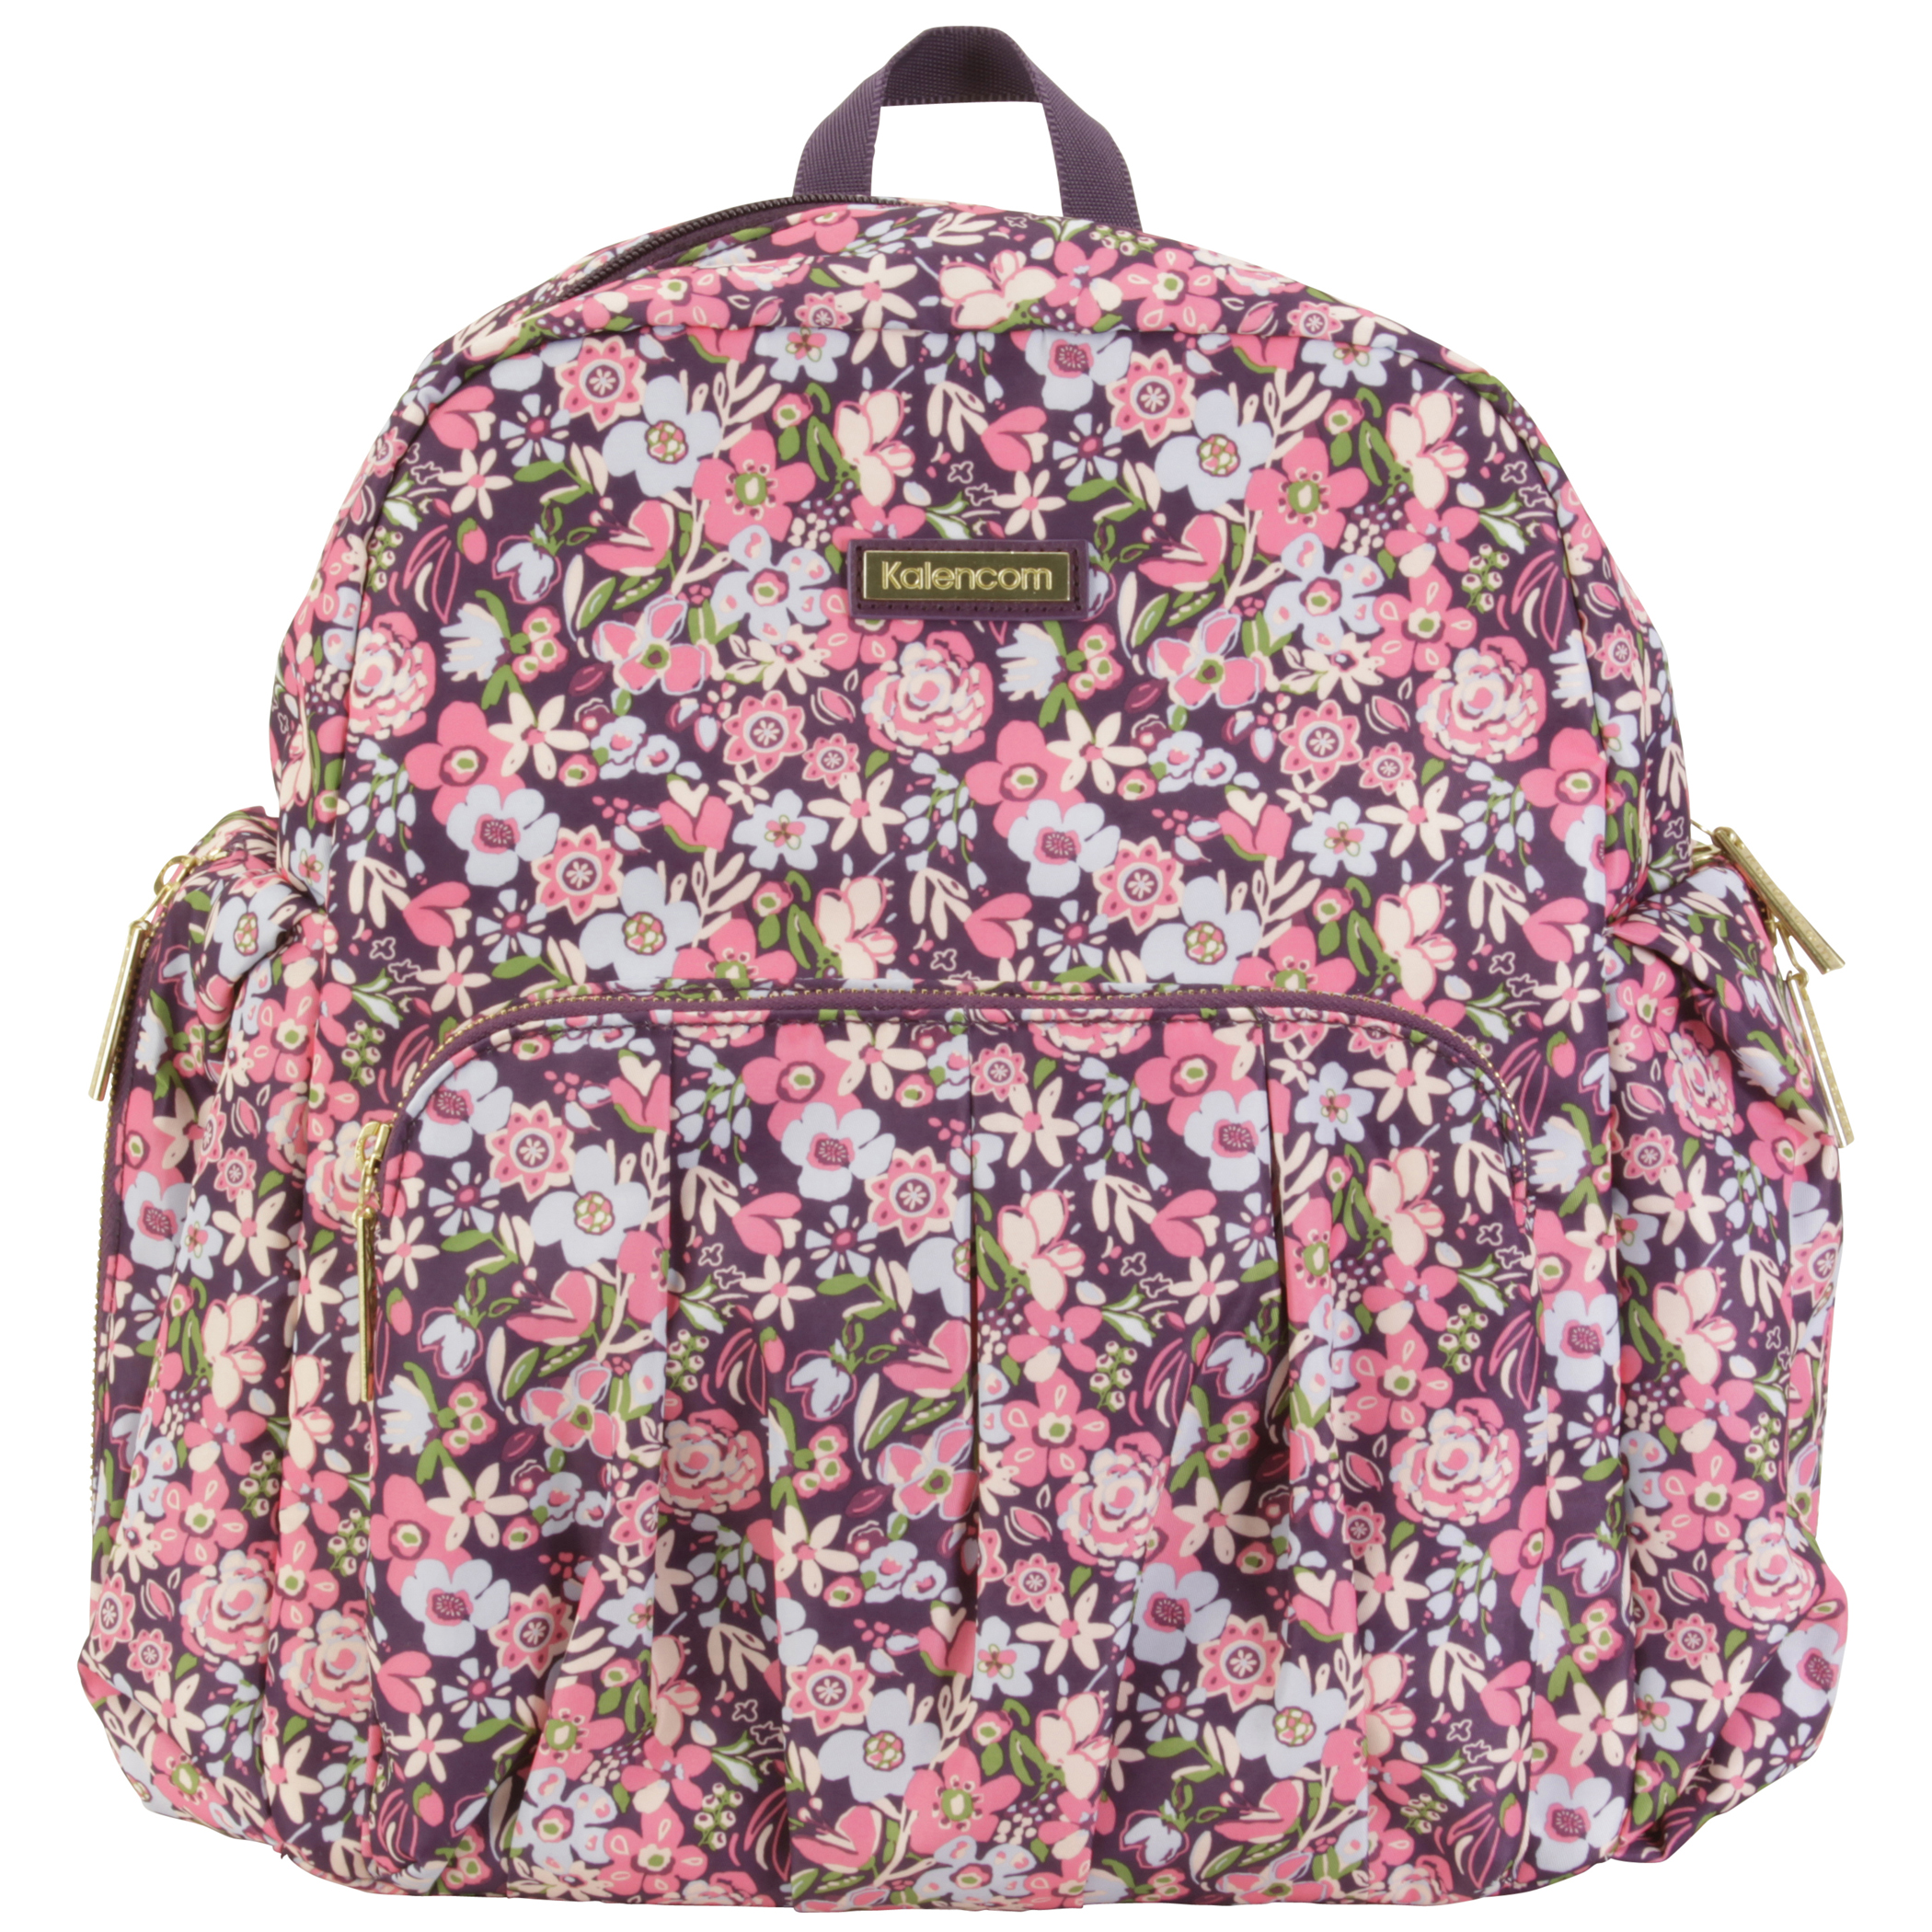 Kalencom Chicago Backpack / Urban Sling Diaper Bag in Blossoms - image 1 of 7